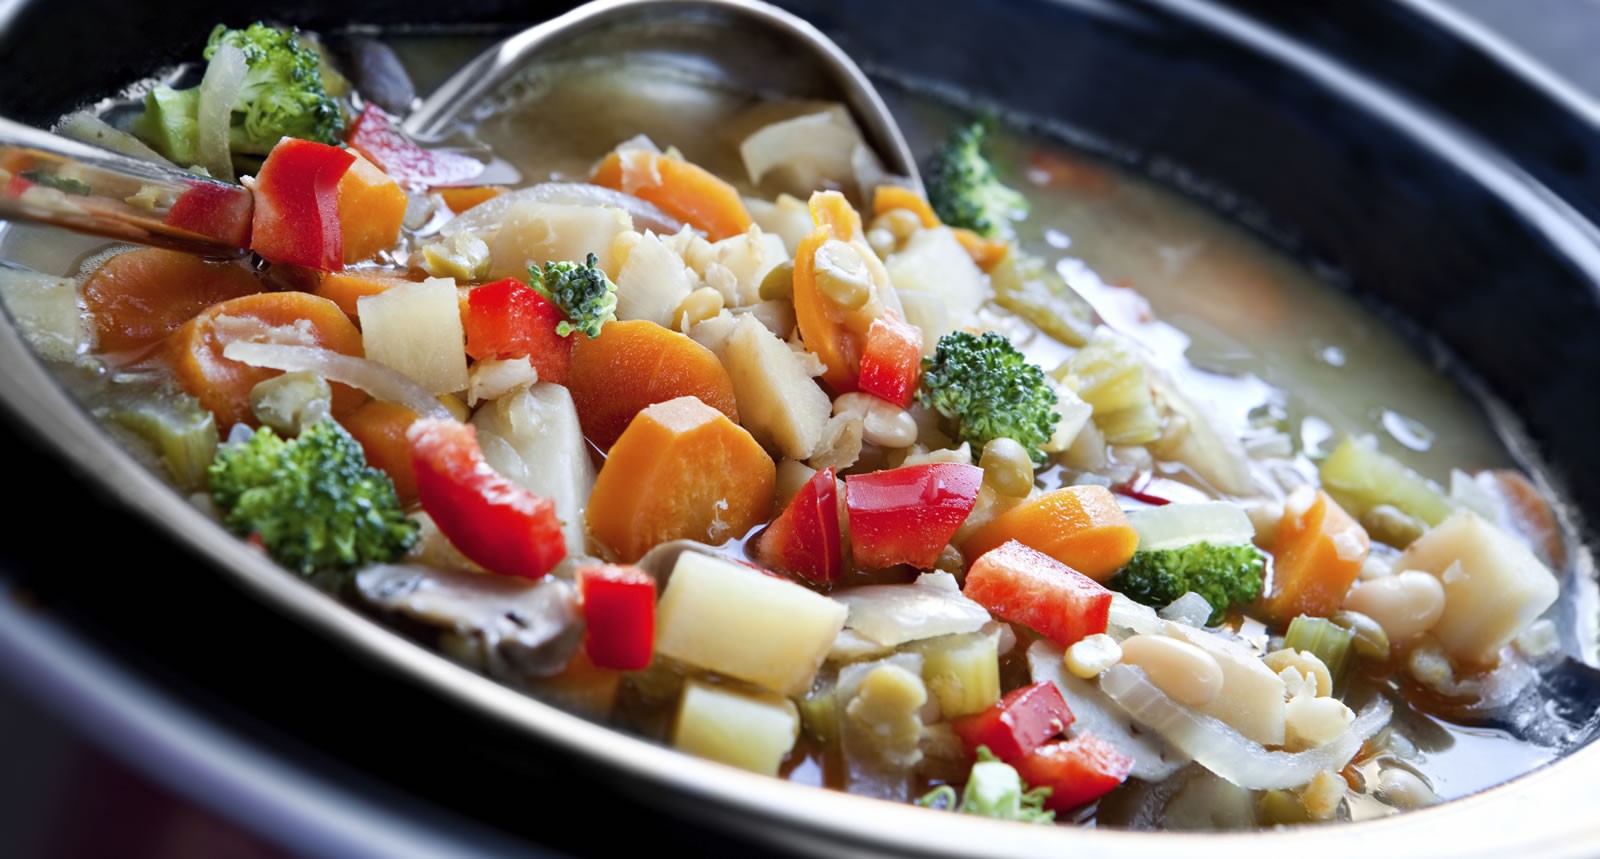 Easy to Prepare Healthy Crockpot Recipes